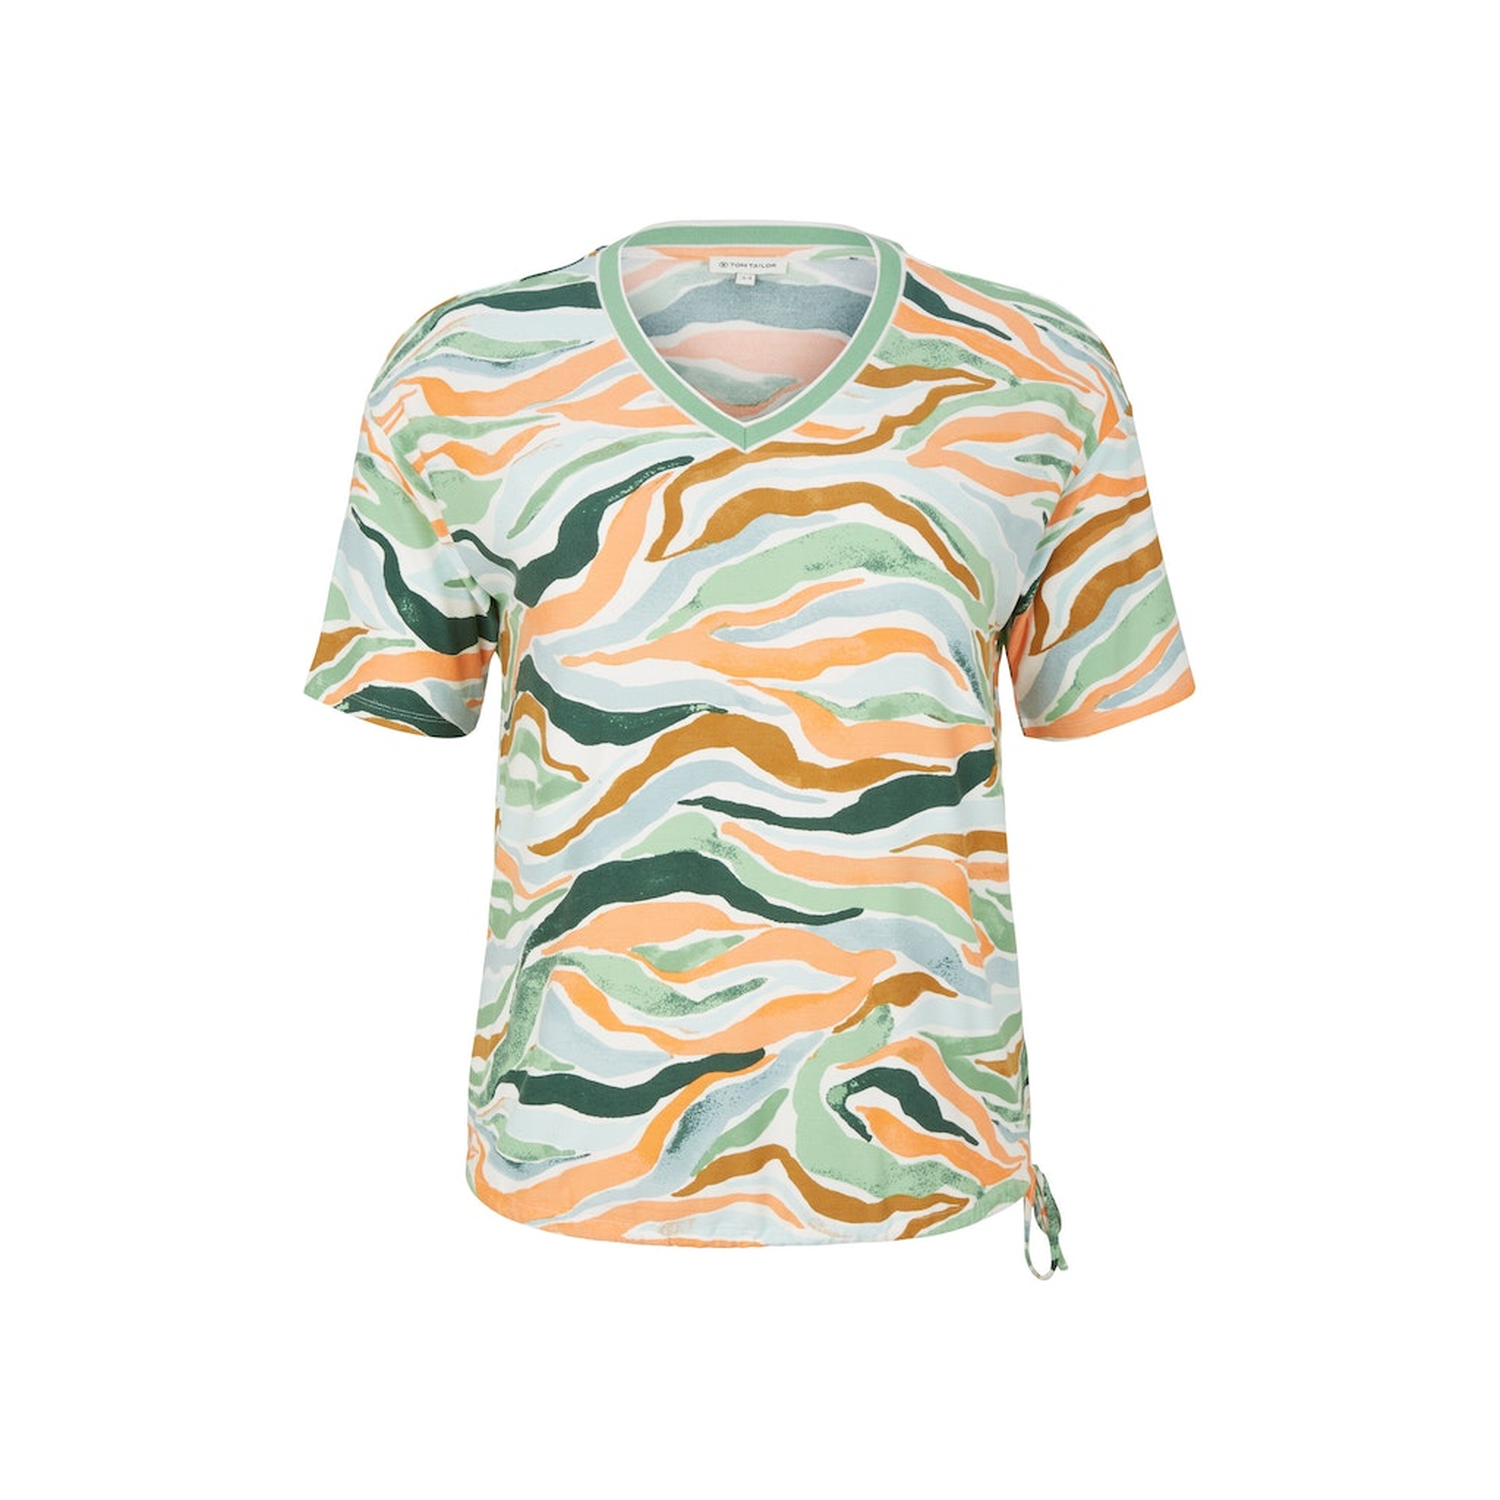 25,00 PLUS colorful T-Shirt TAILOR TOM Alloverprint € design, mit wavy